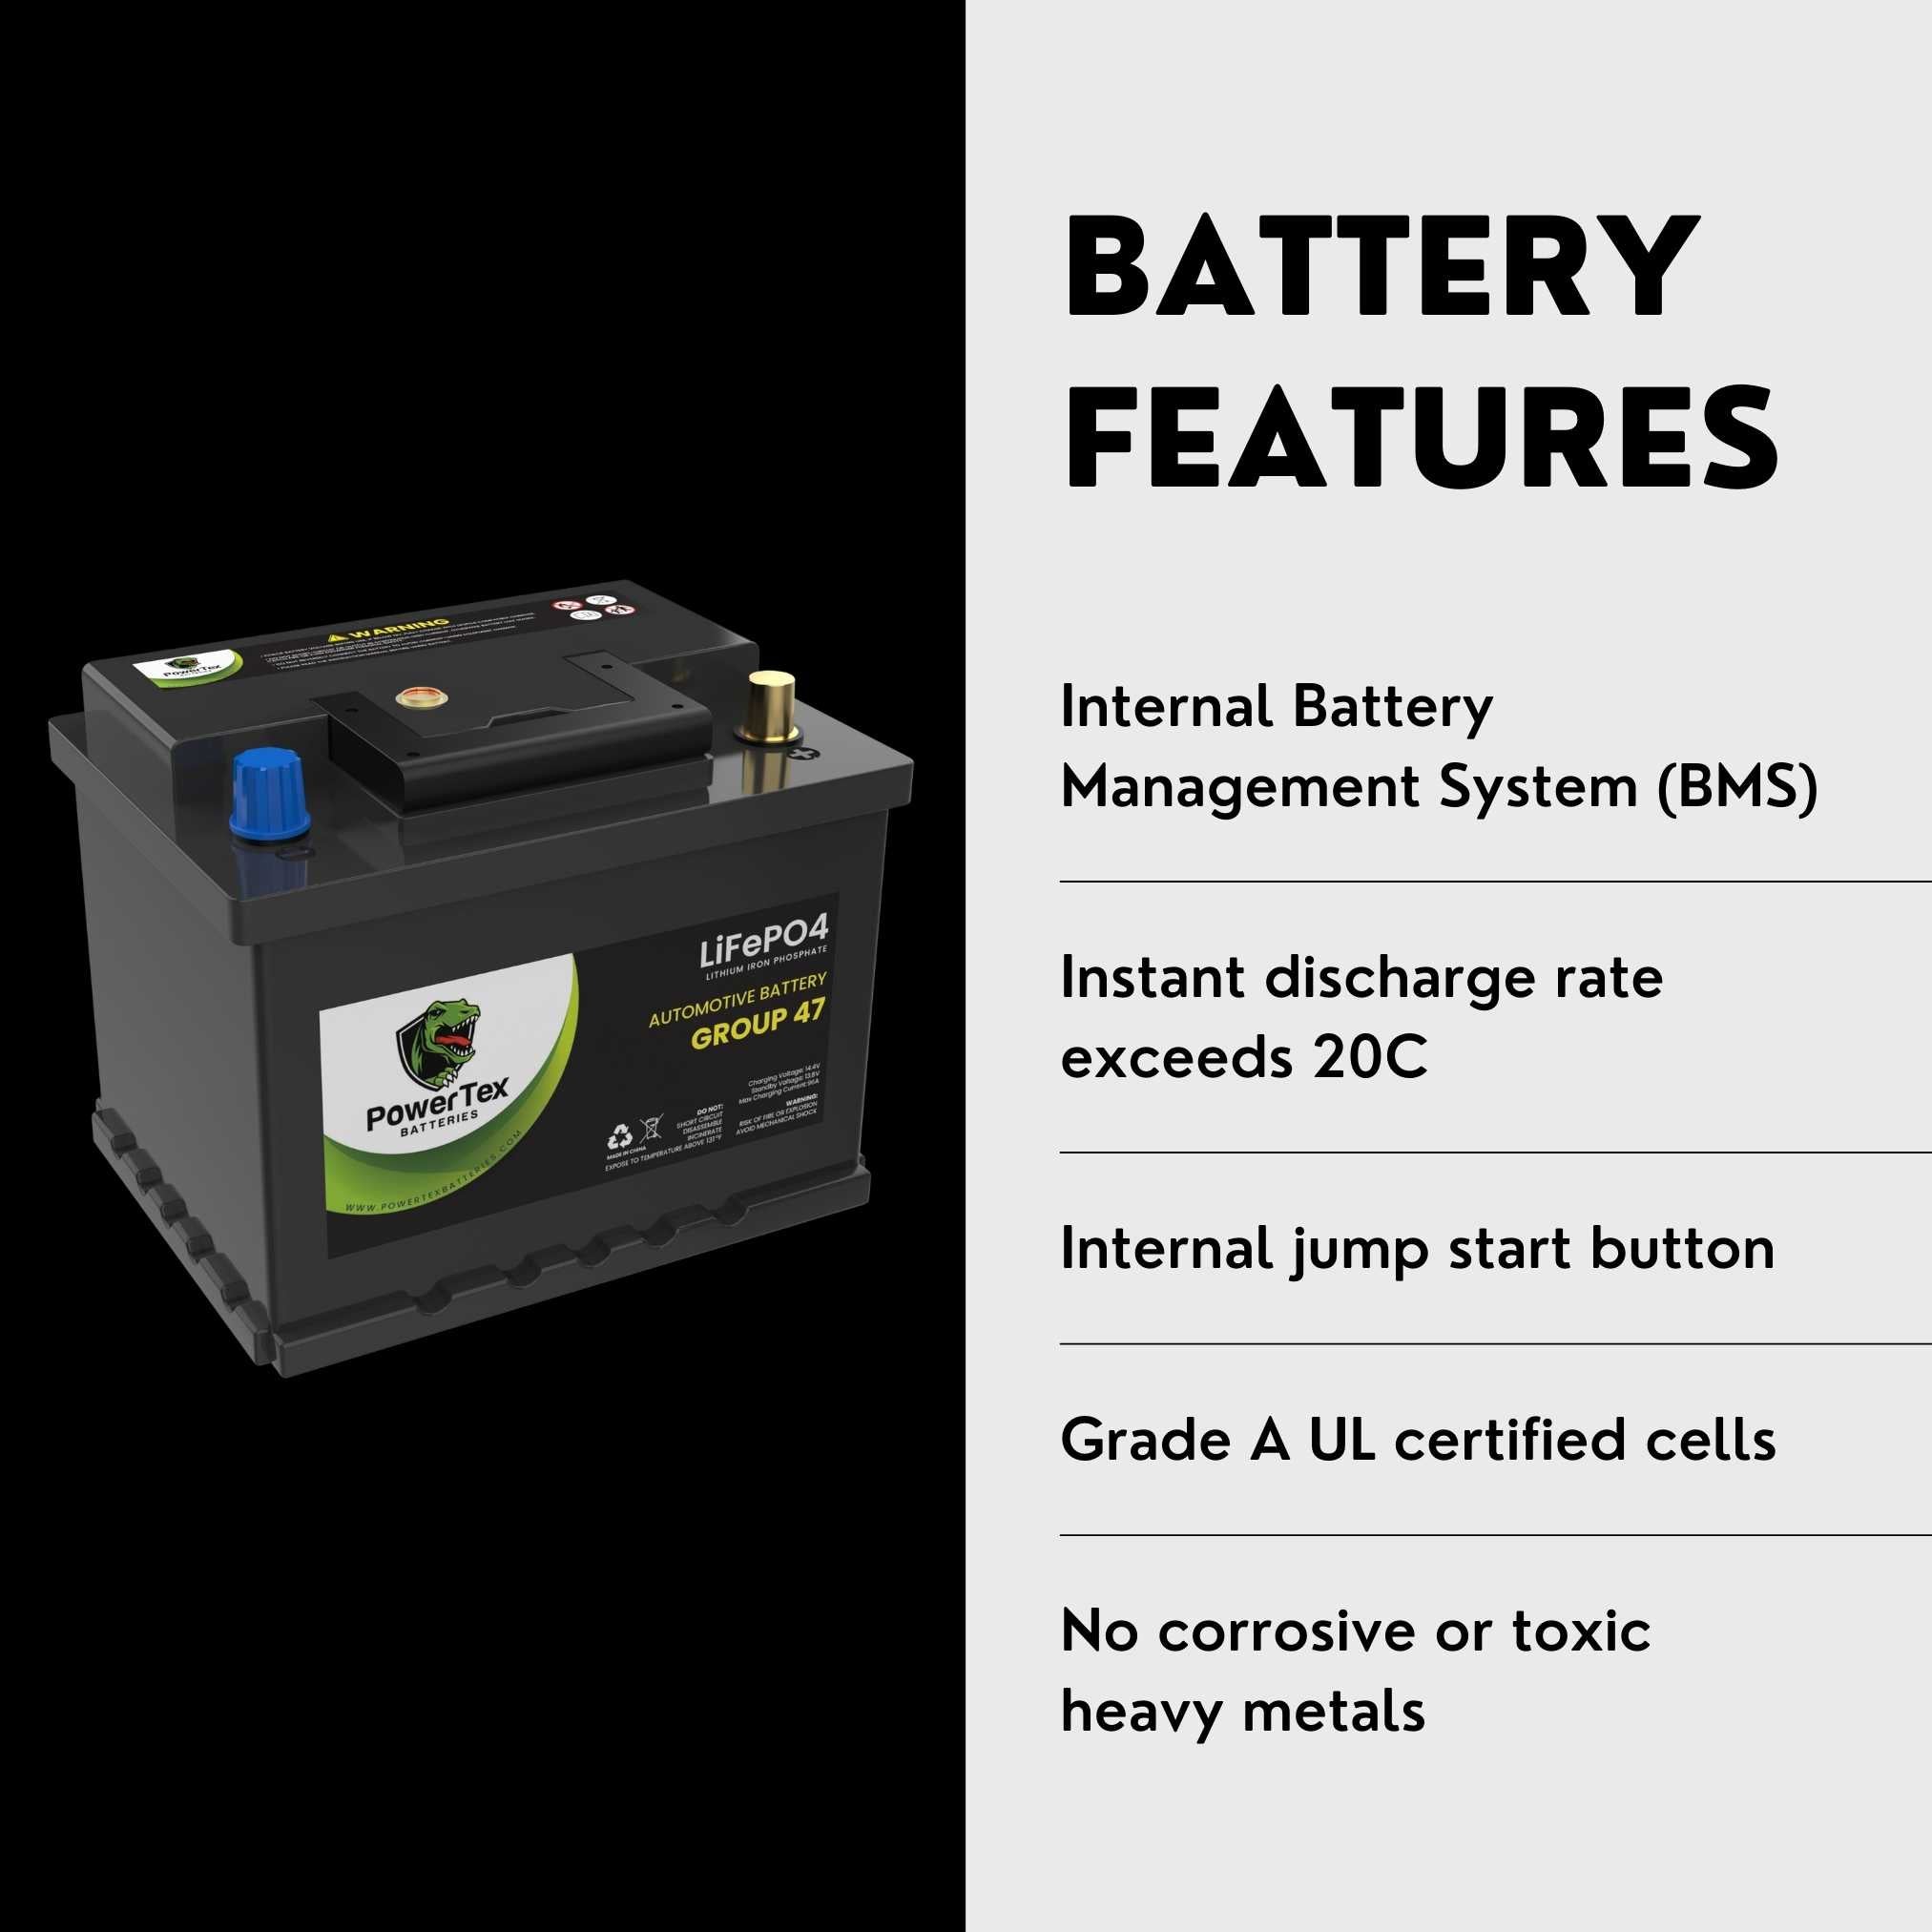 2020 Nissan Pathfinder Car Battery BCI Group 47 H5 Lithium Battery –  PowerTex Batteries